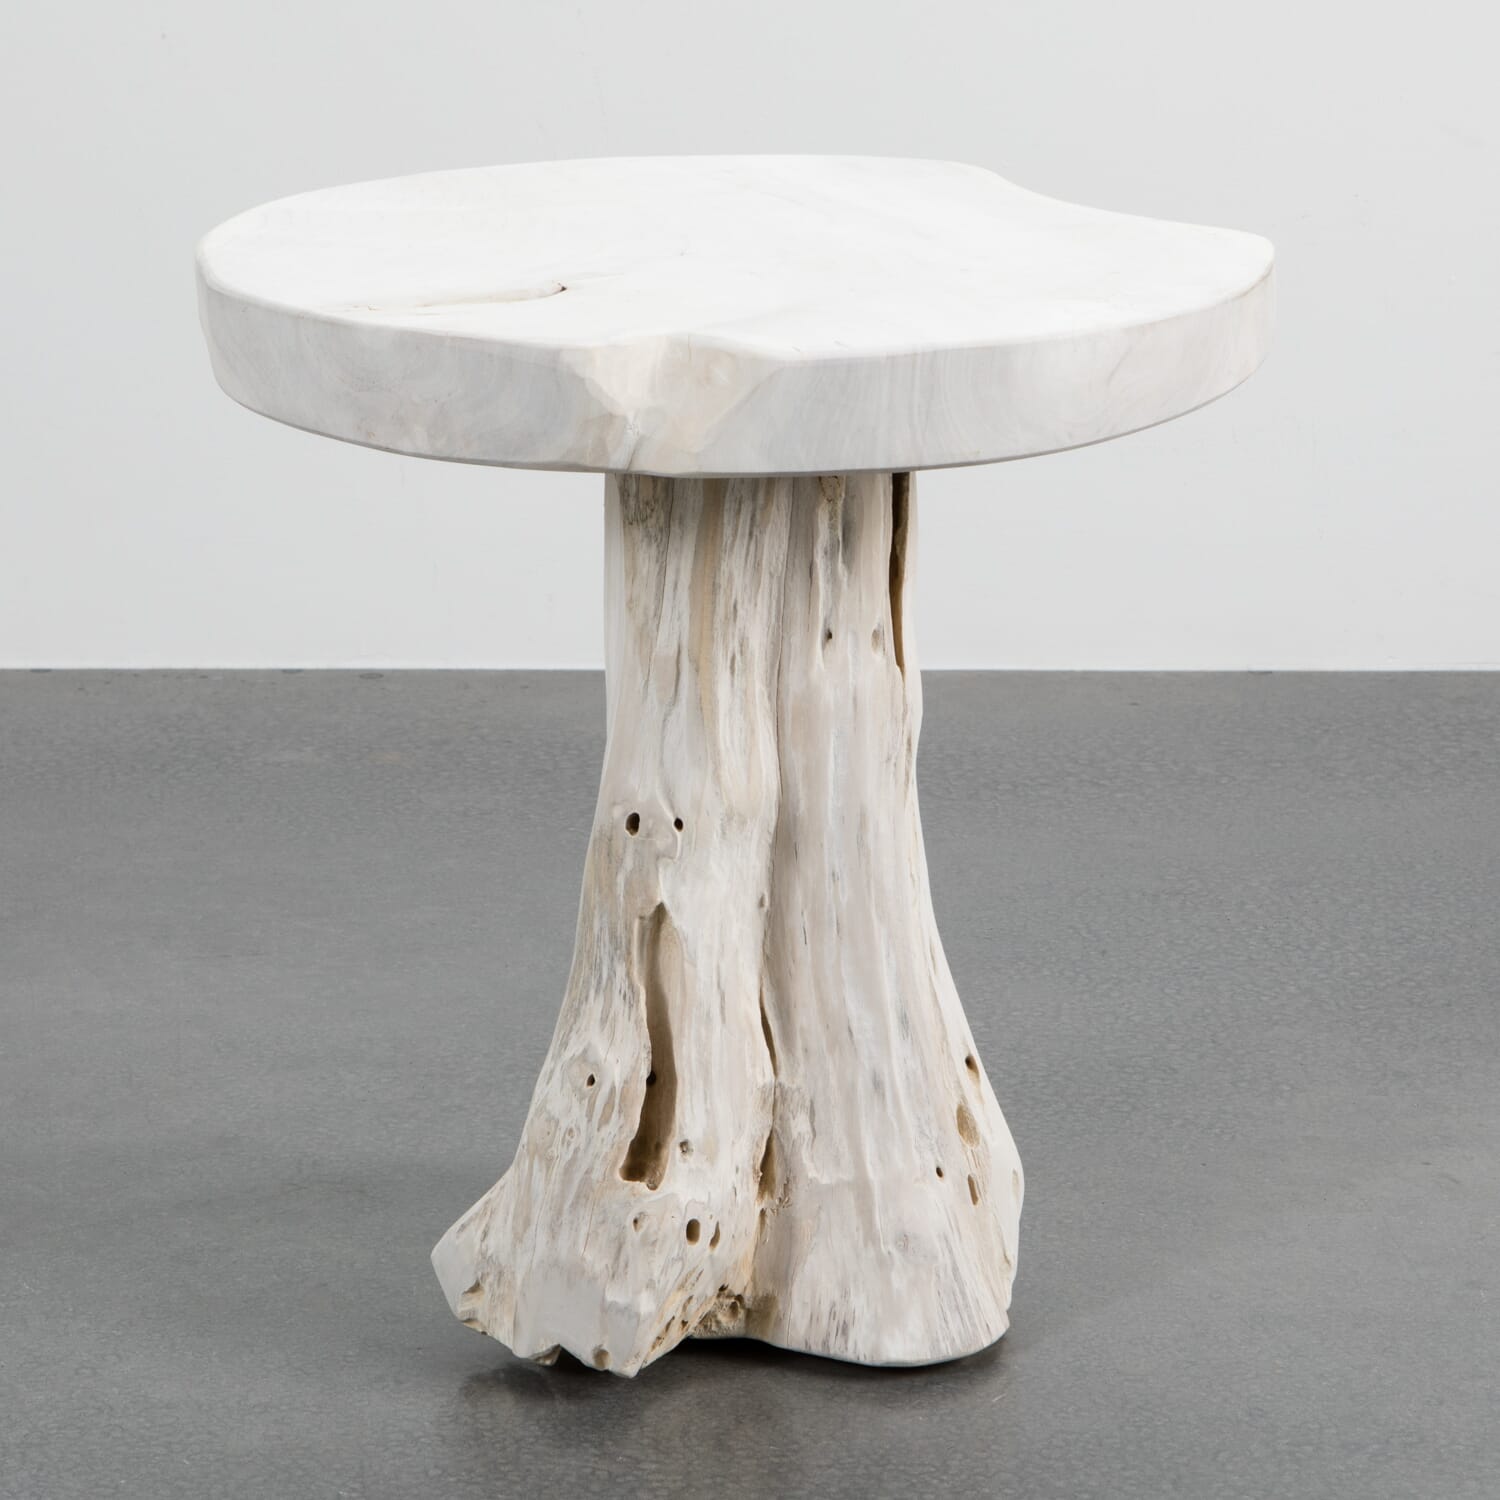 Asst'd Bleached Mushroom Table